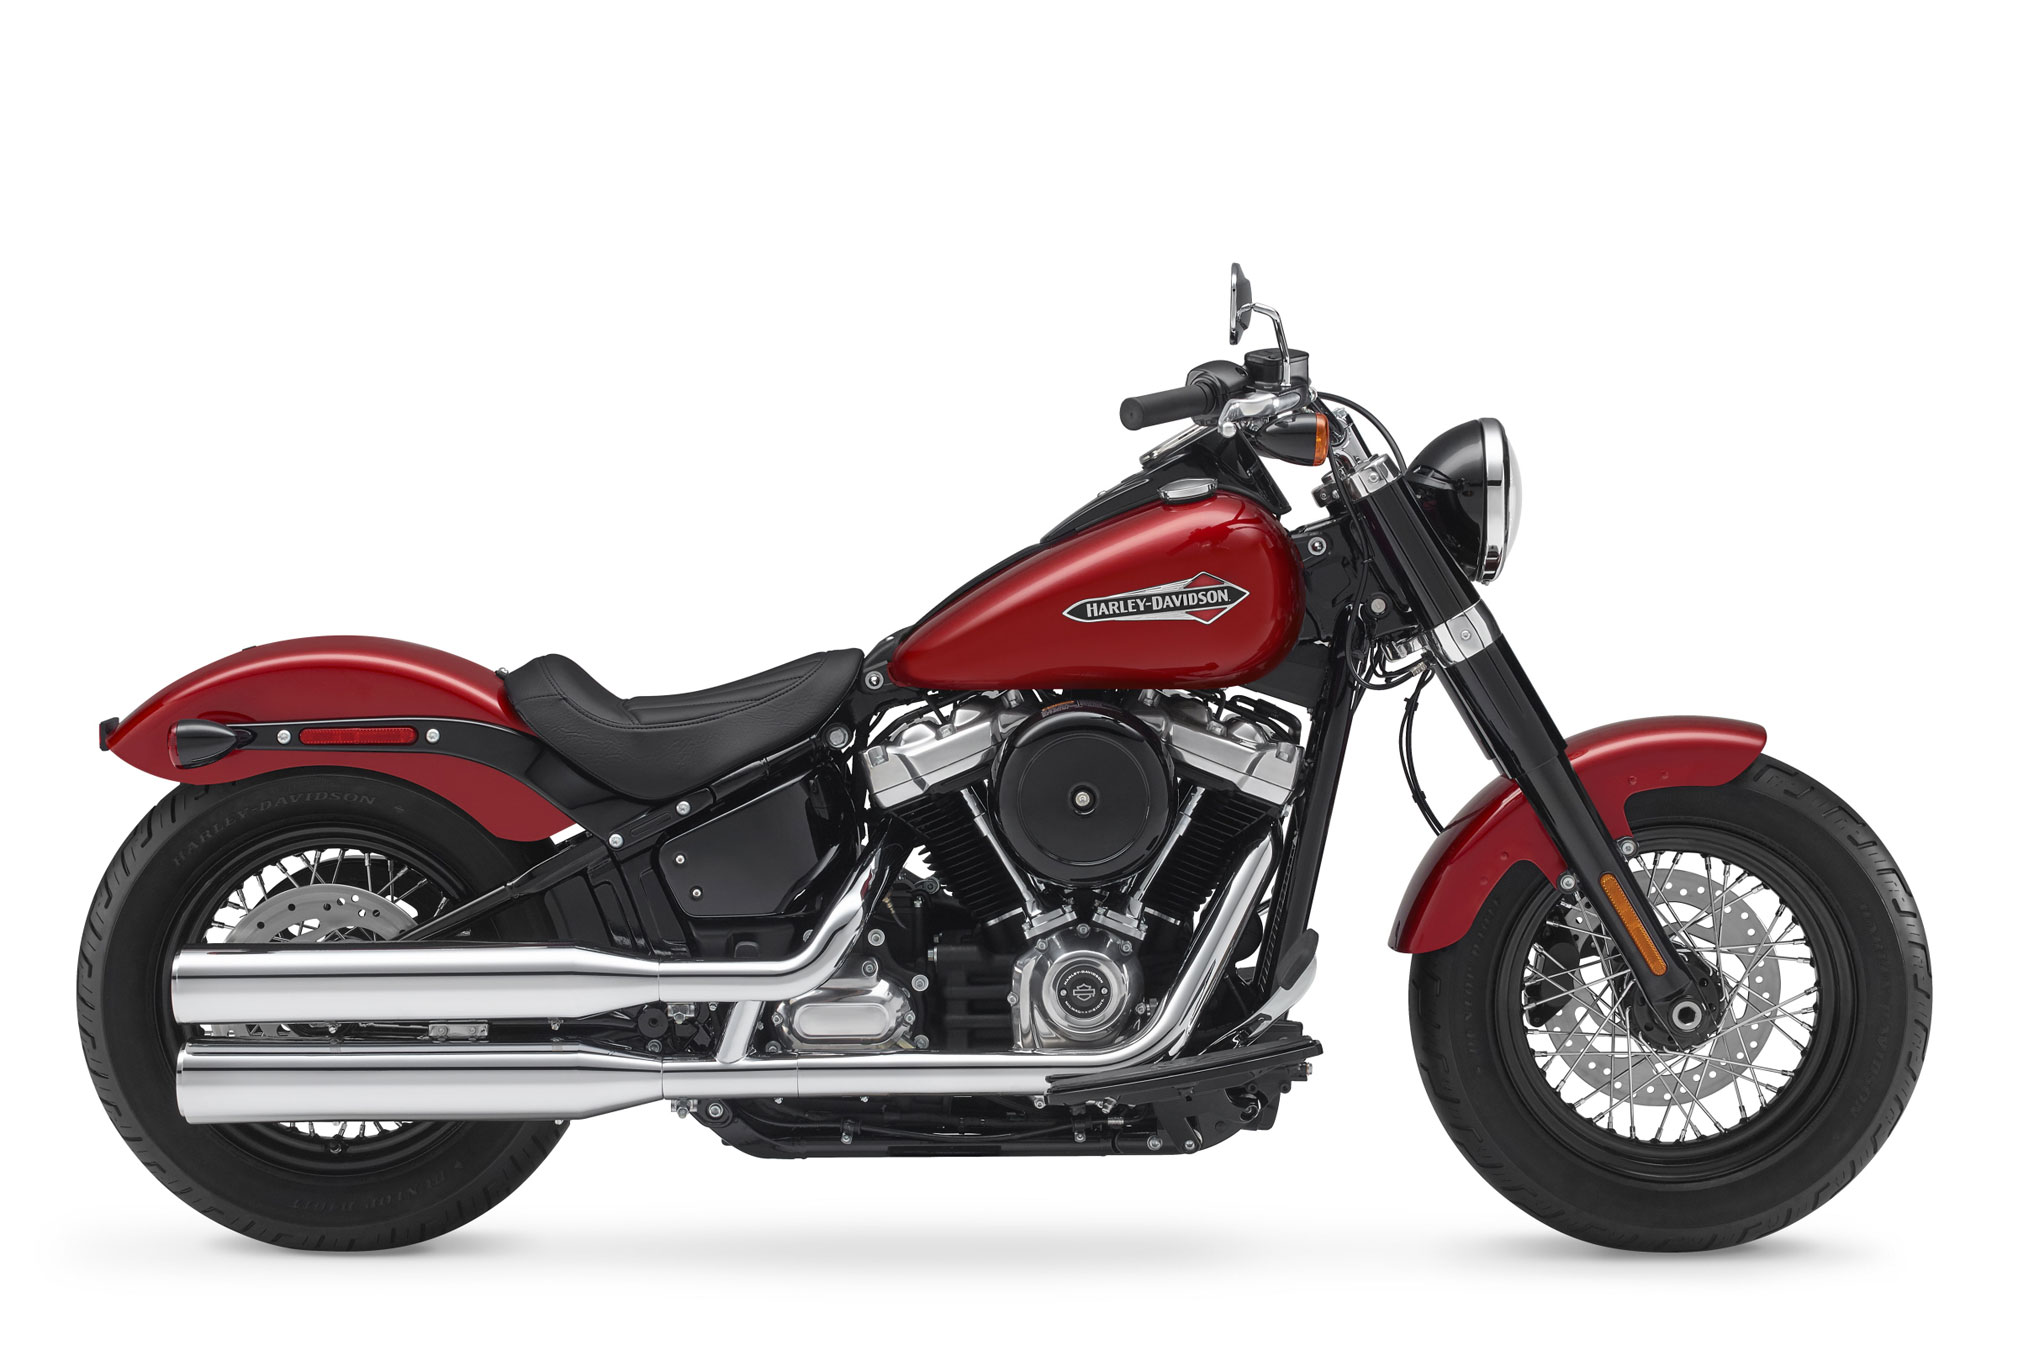 2019 Harley  Davidson  Softail  Slim Review  Total Motorcycle